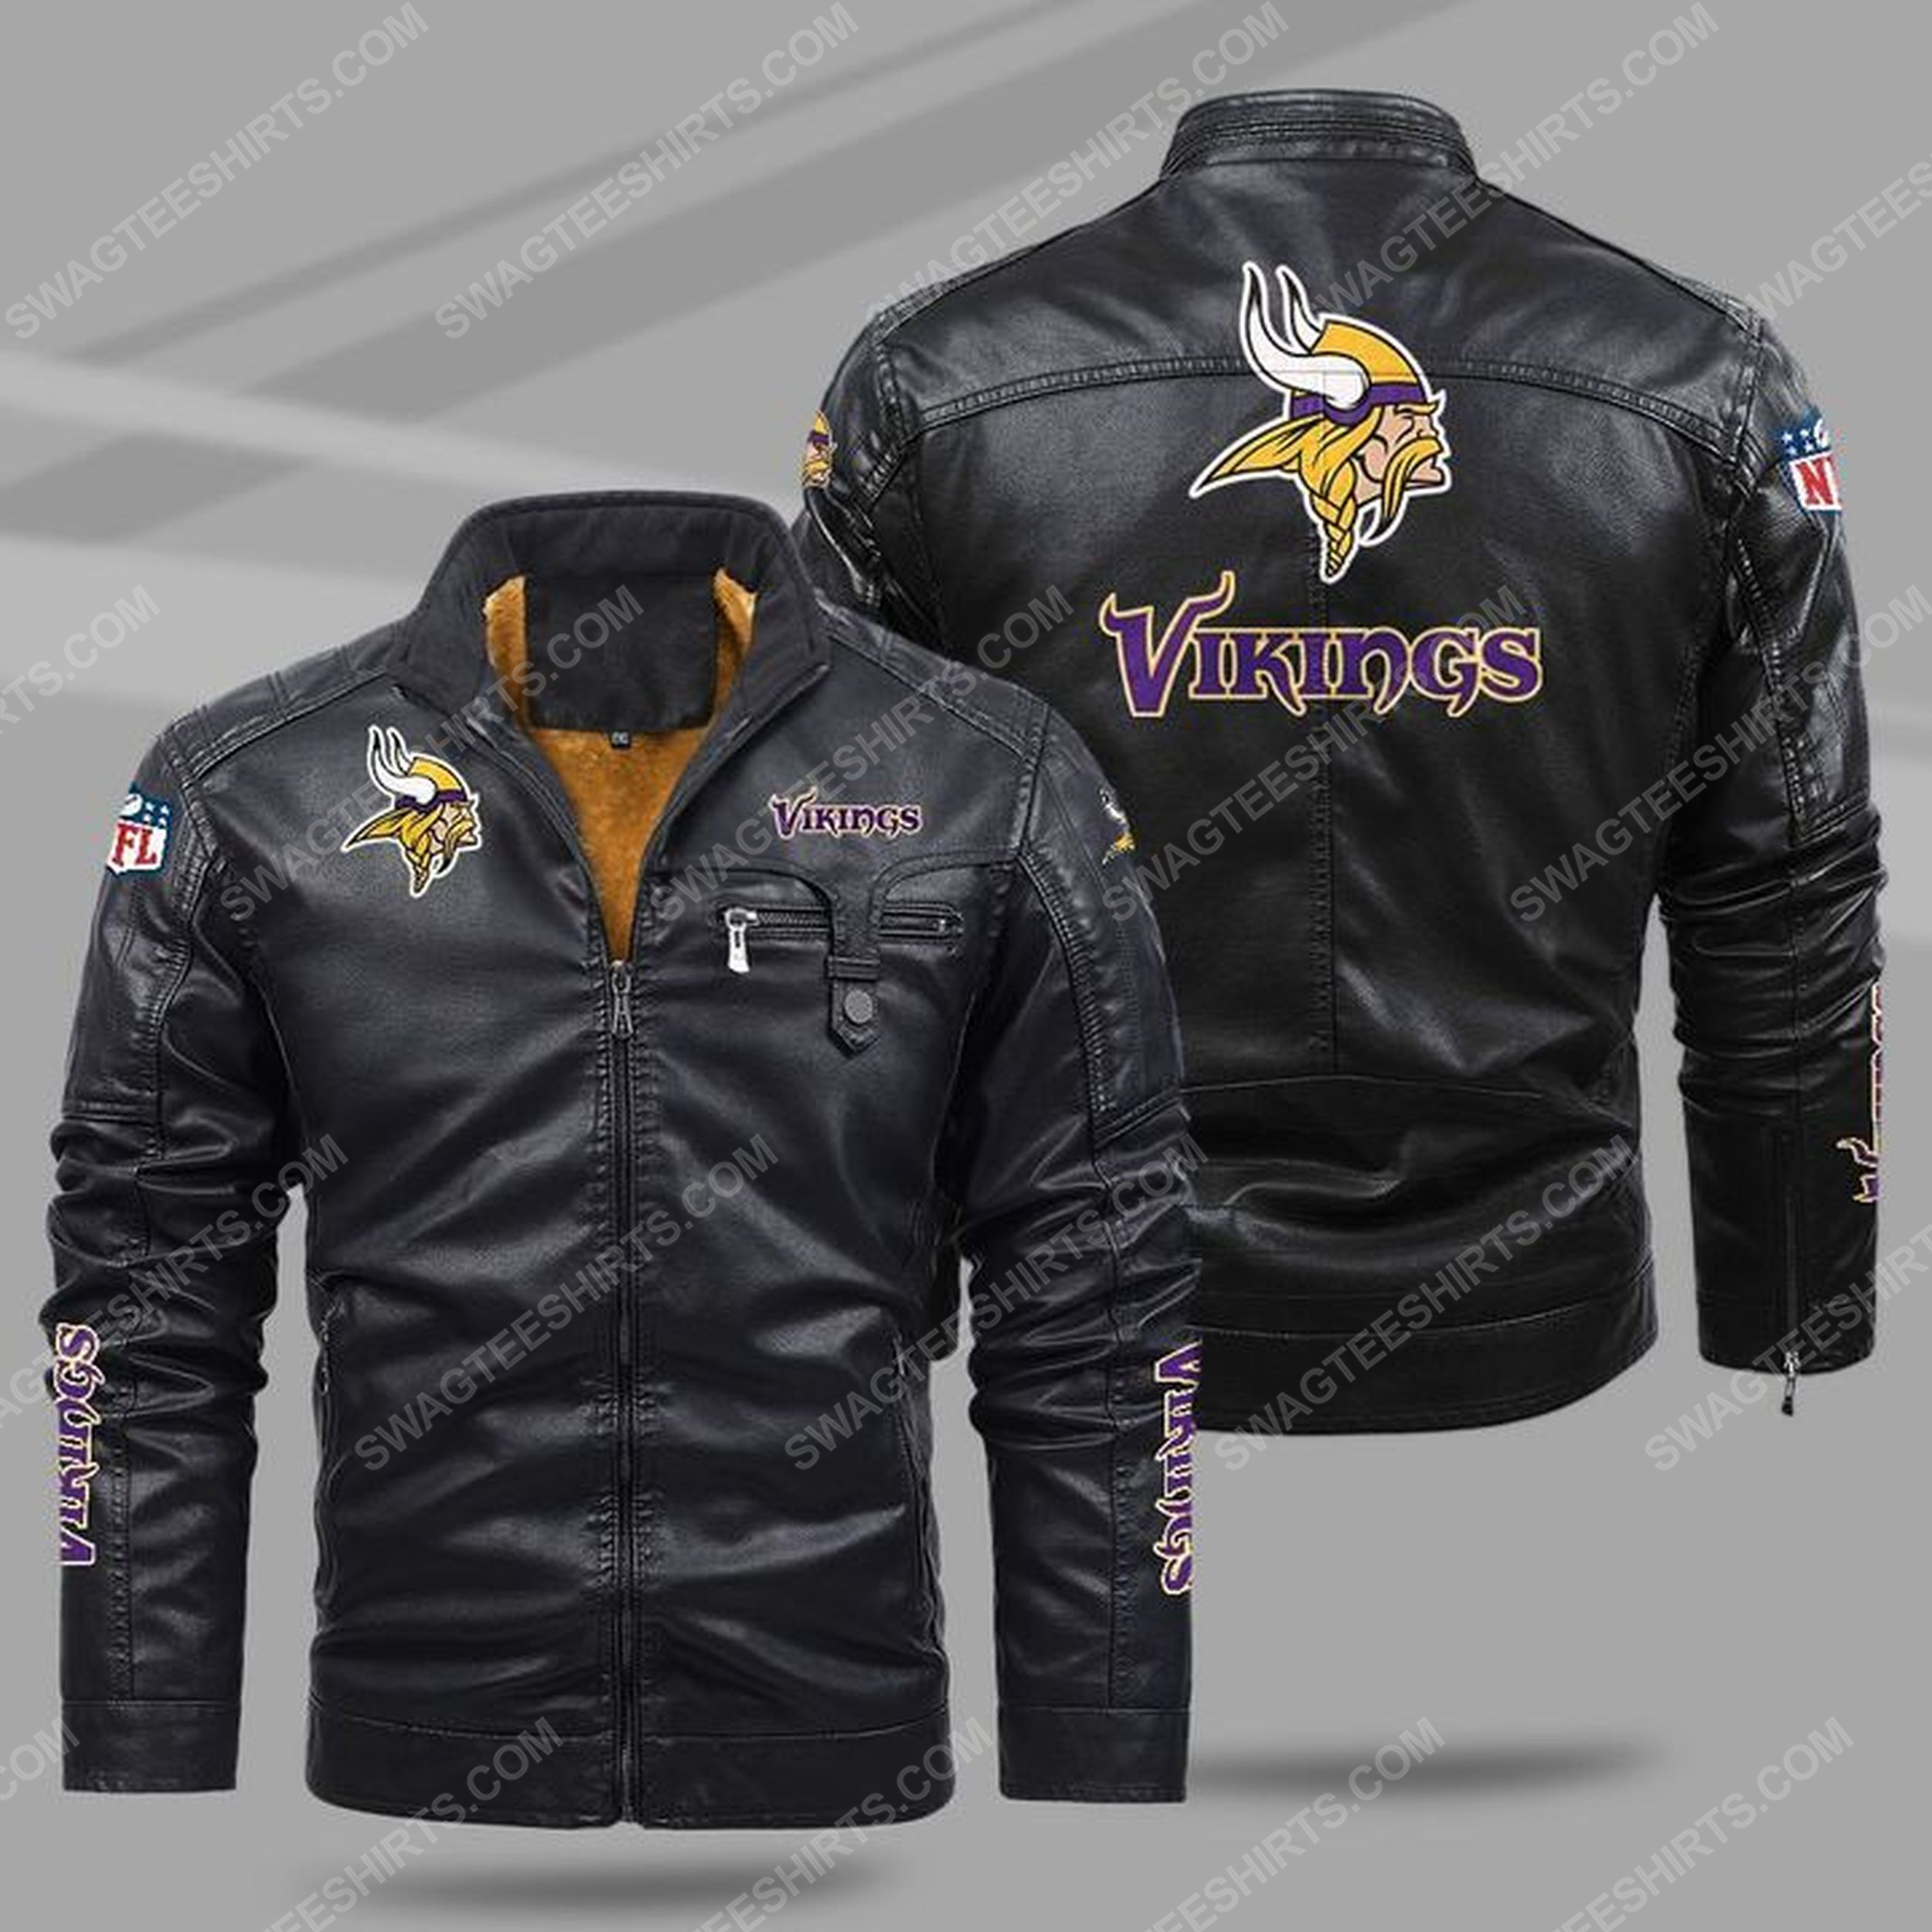 The minnesota vikings nfl all over print fleece leather jacket - black 1 - Copy